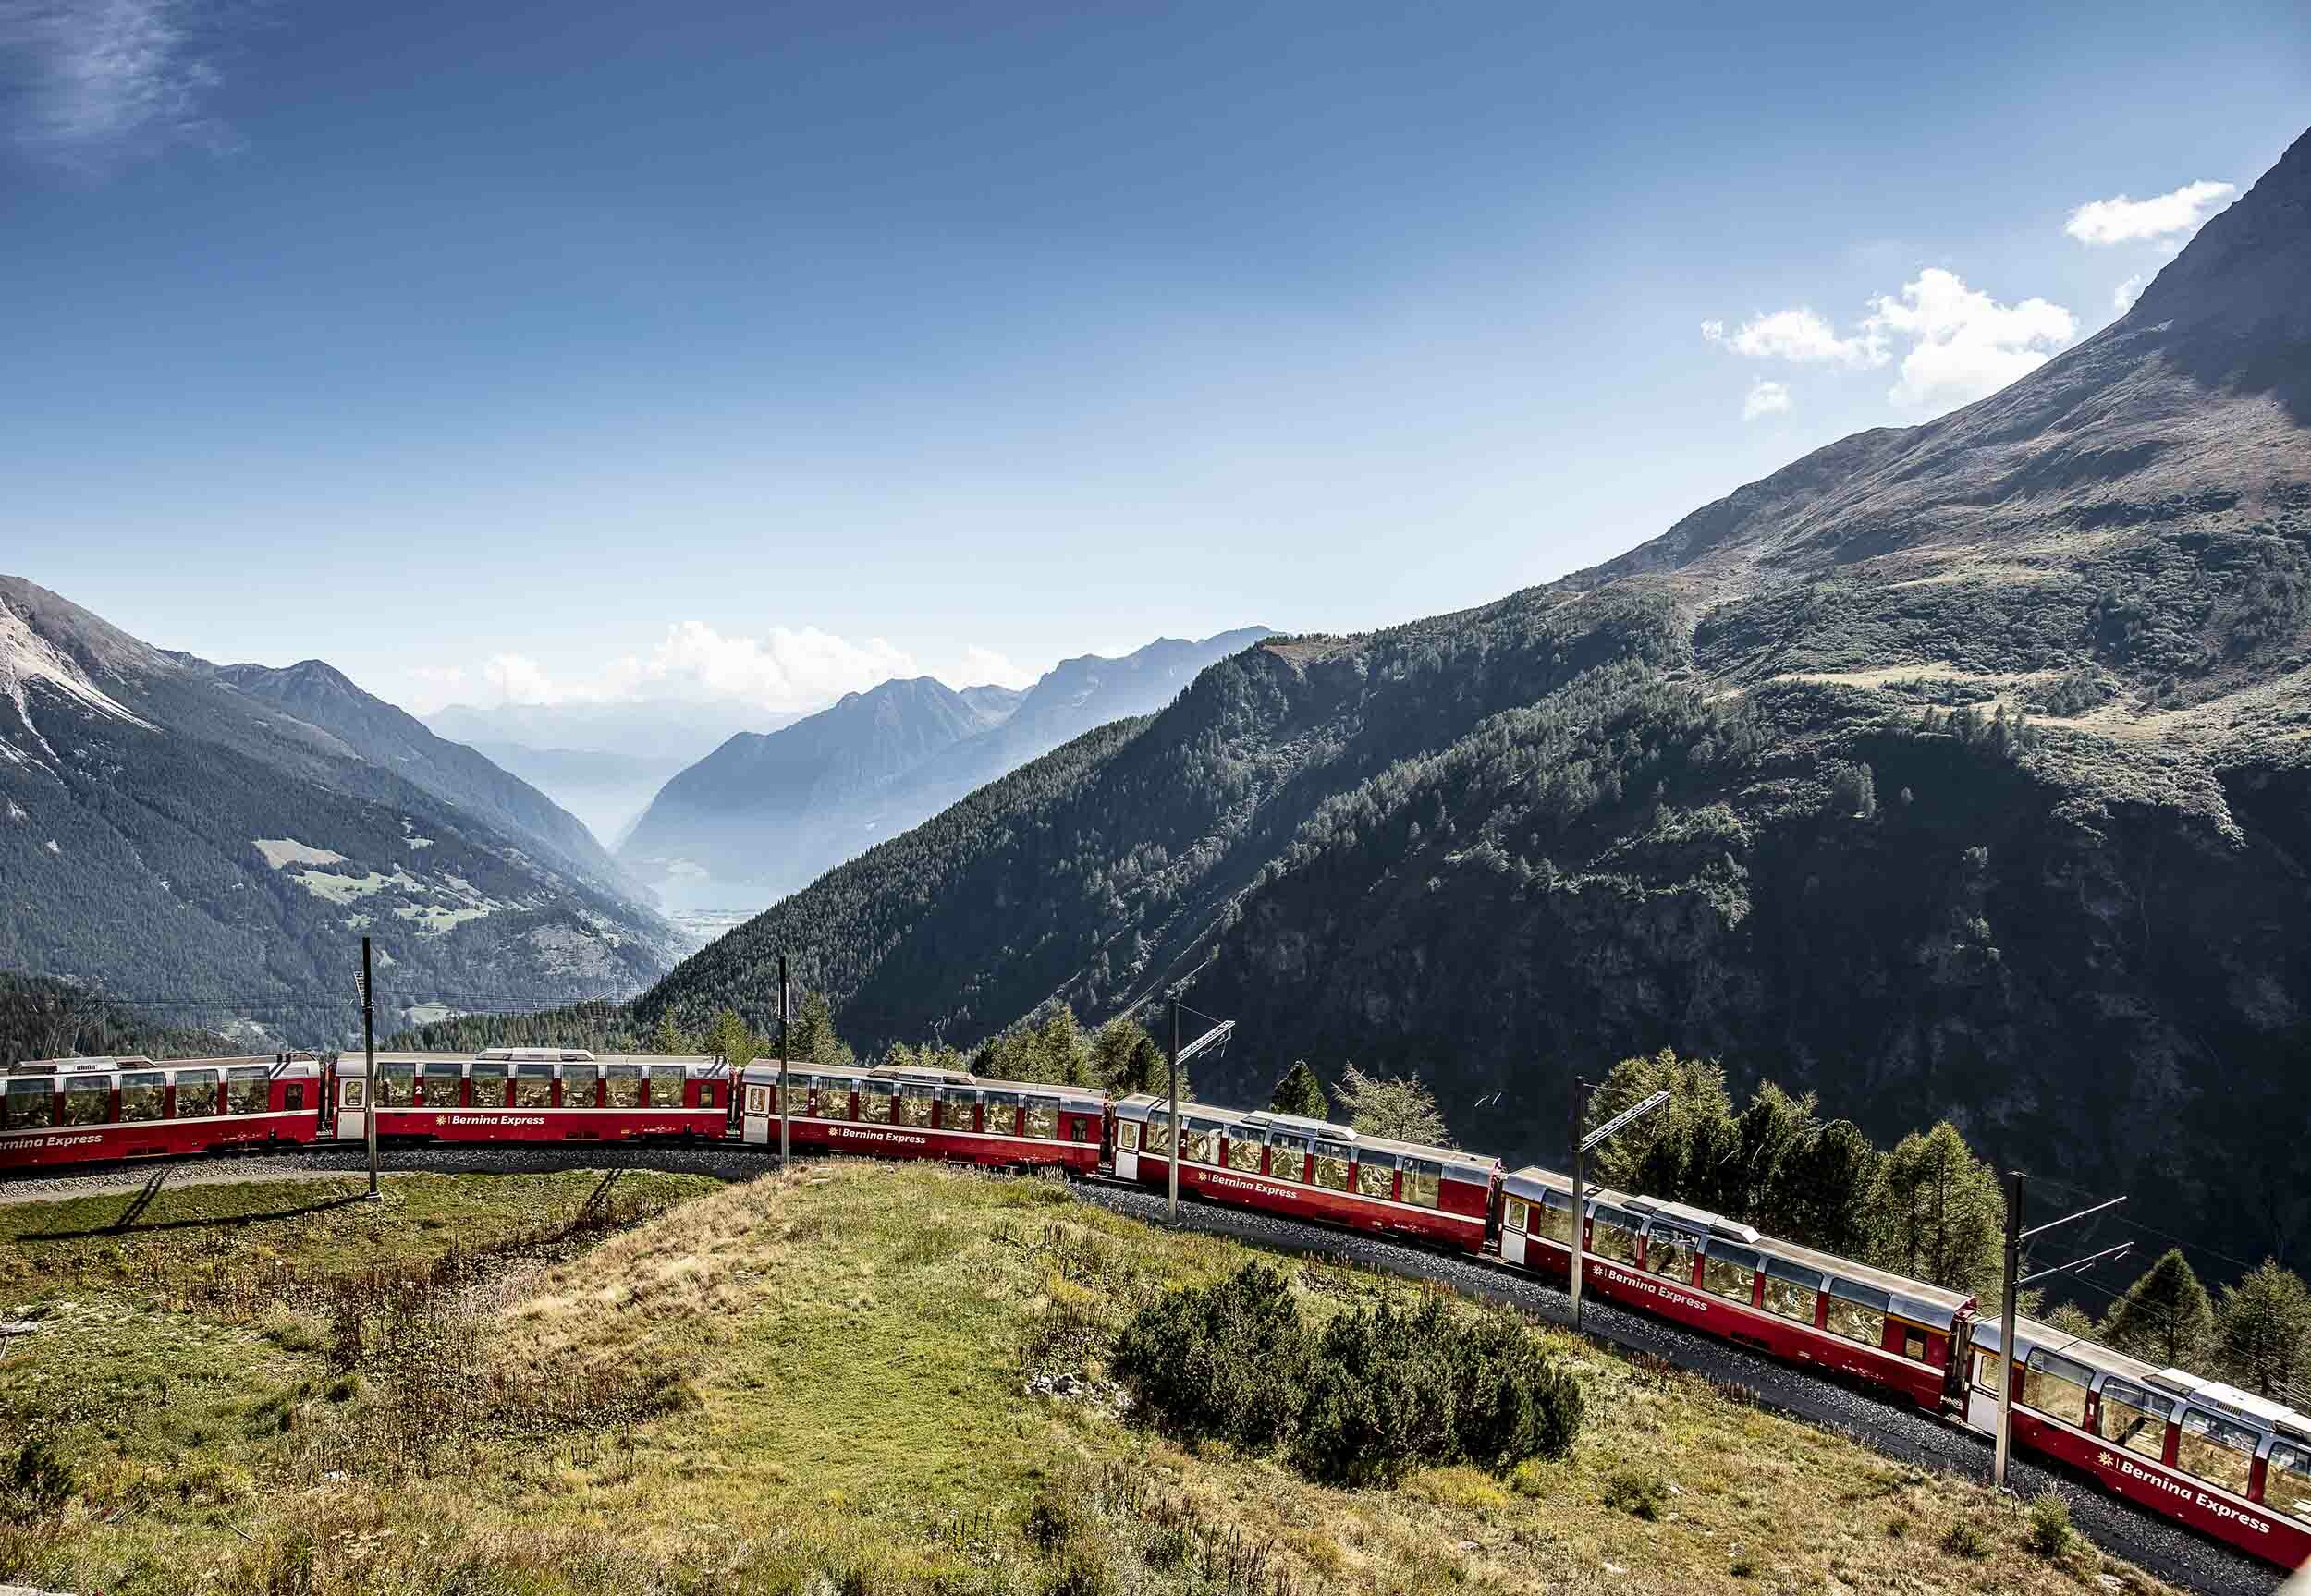 A train climbing up a mountain pass